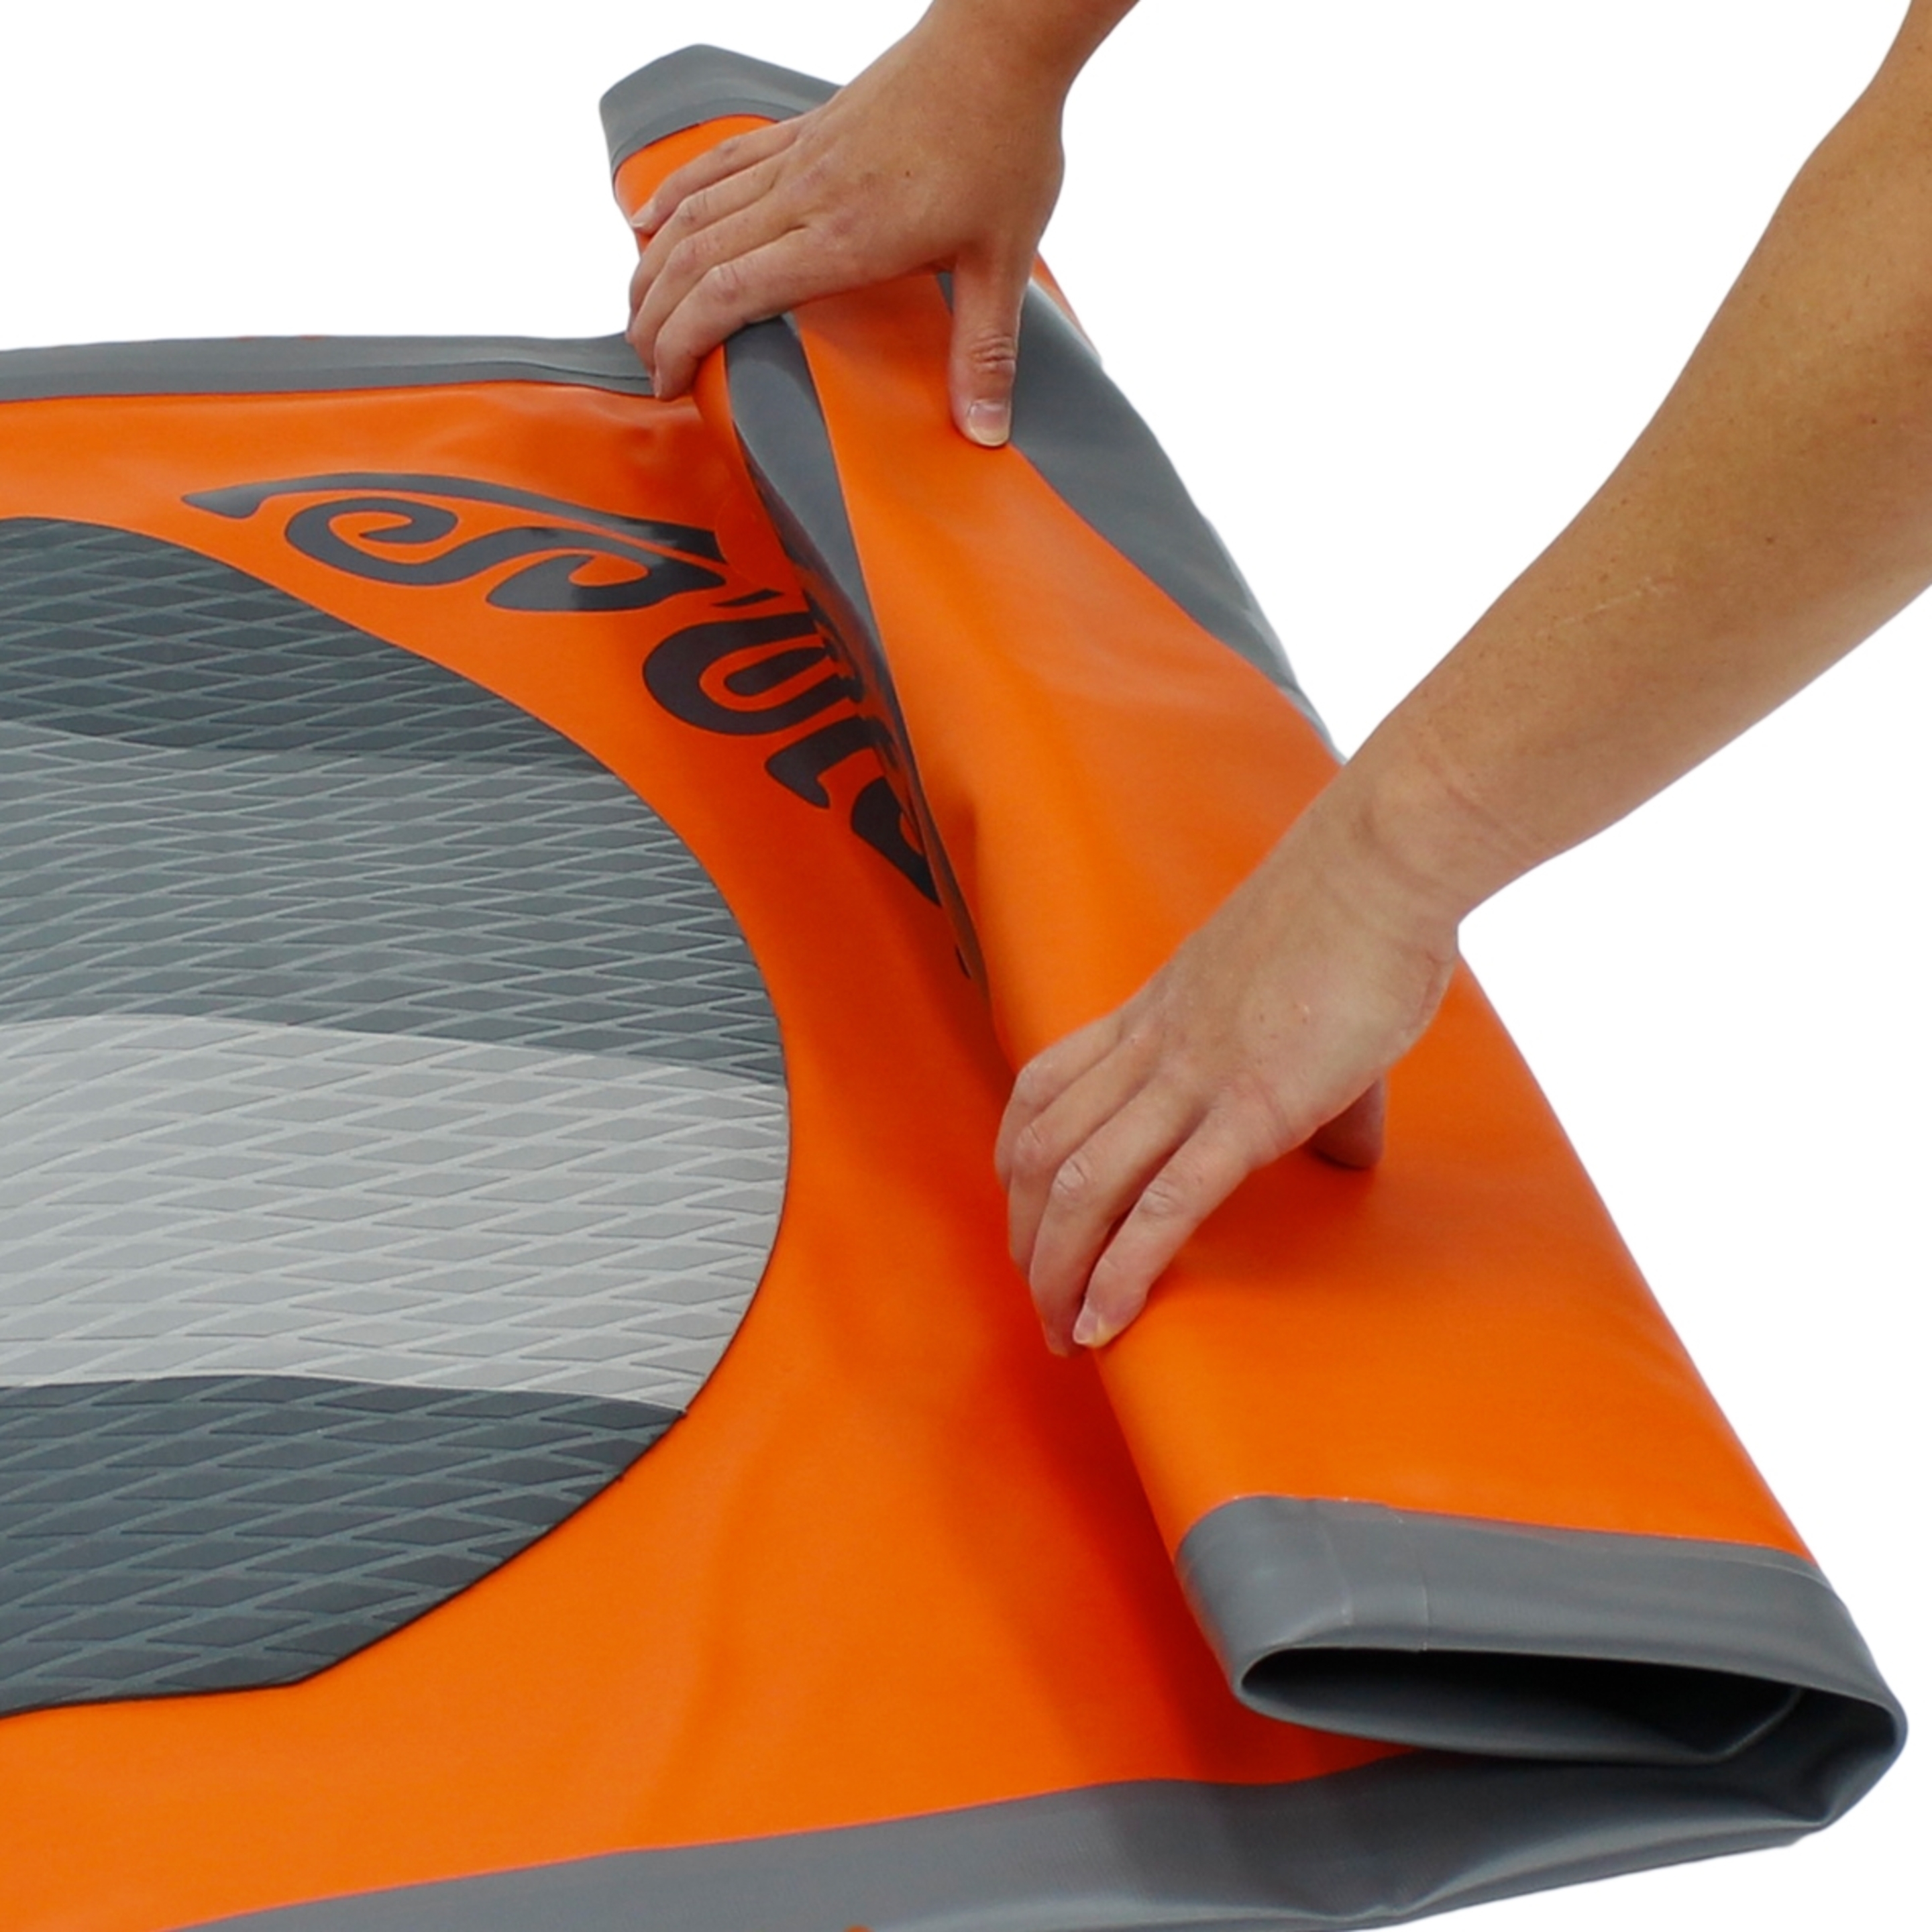 Prancha De Surf Stand Up Paddle Board Makani Tabla Hinchable Sup Naranja 320x82x15cm Incluido Accesorios